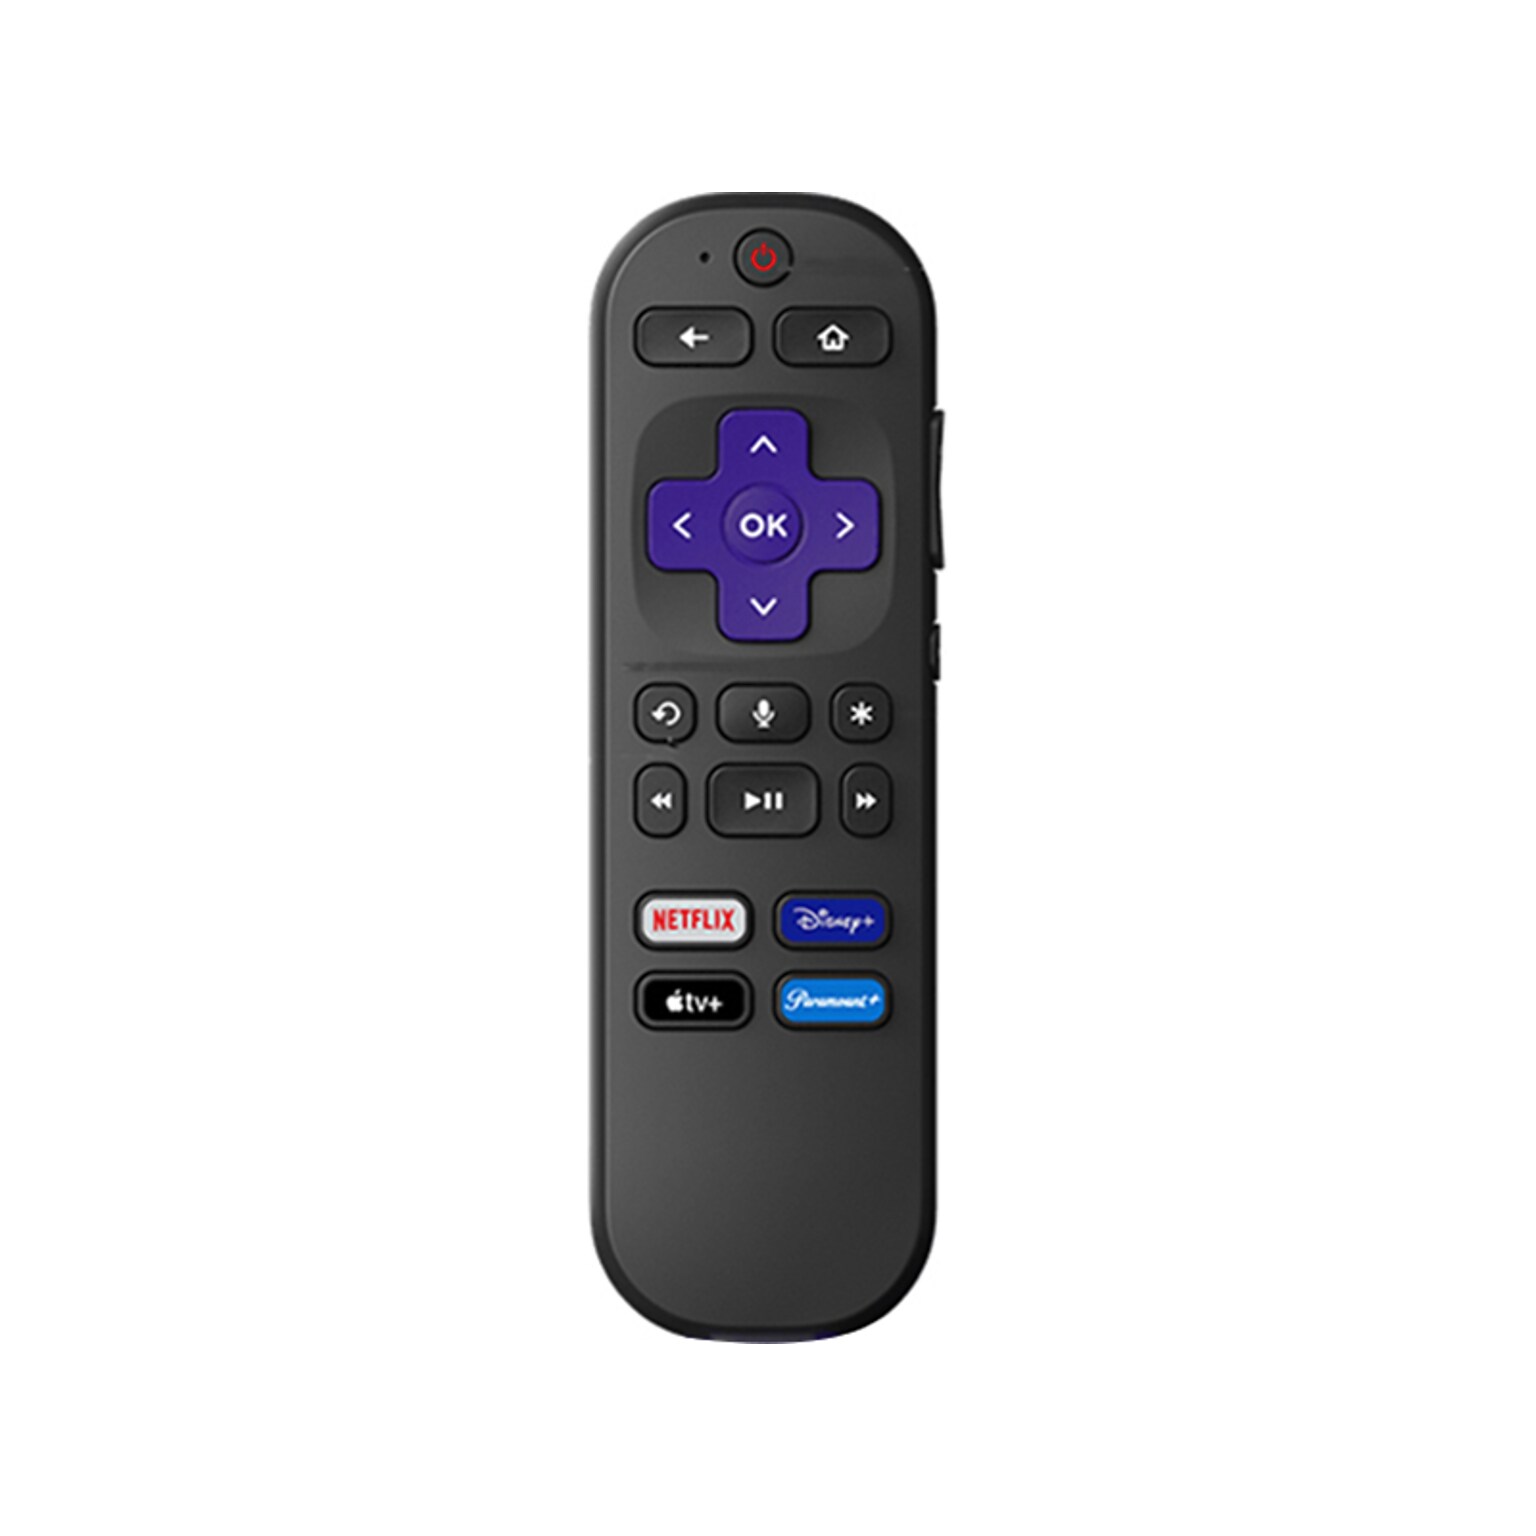 Roku Voice Remote with TV Controls for Roku TV (RCA1R)